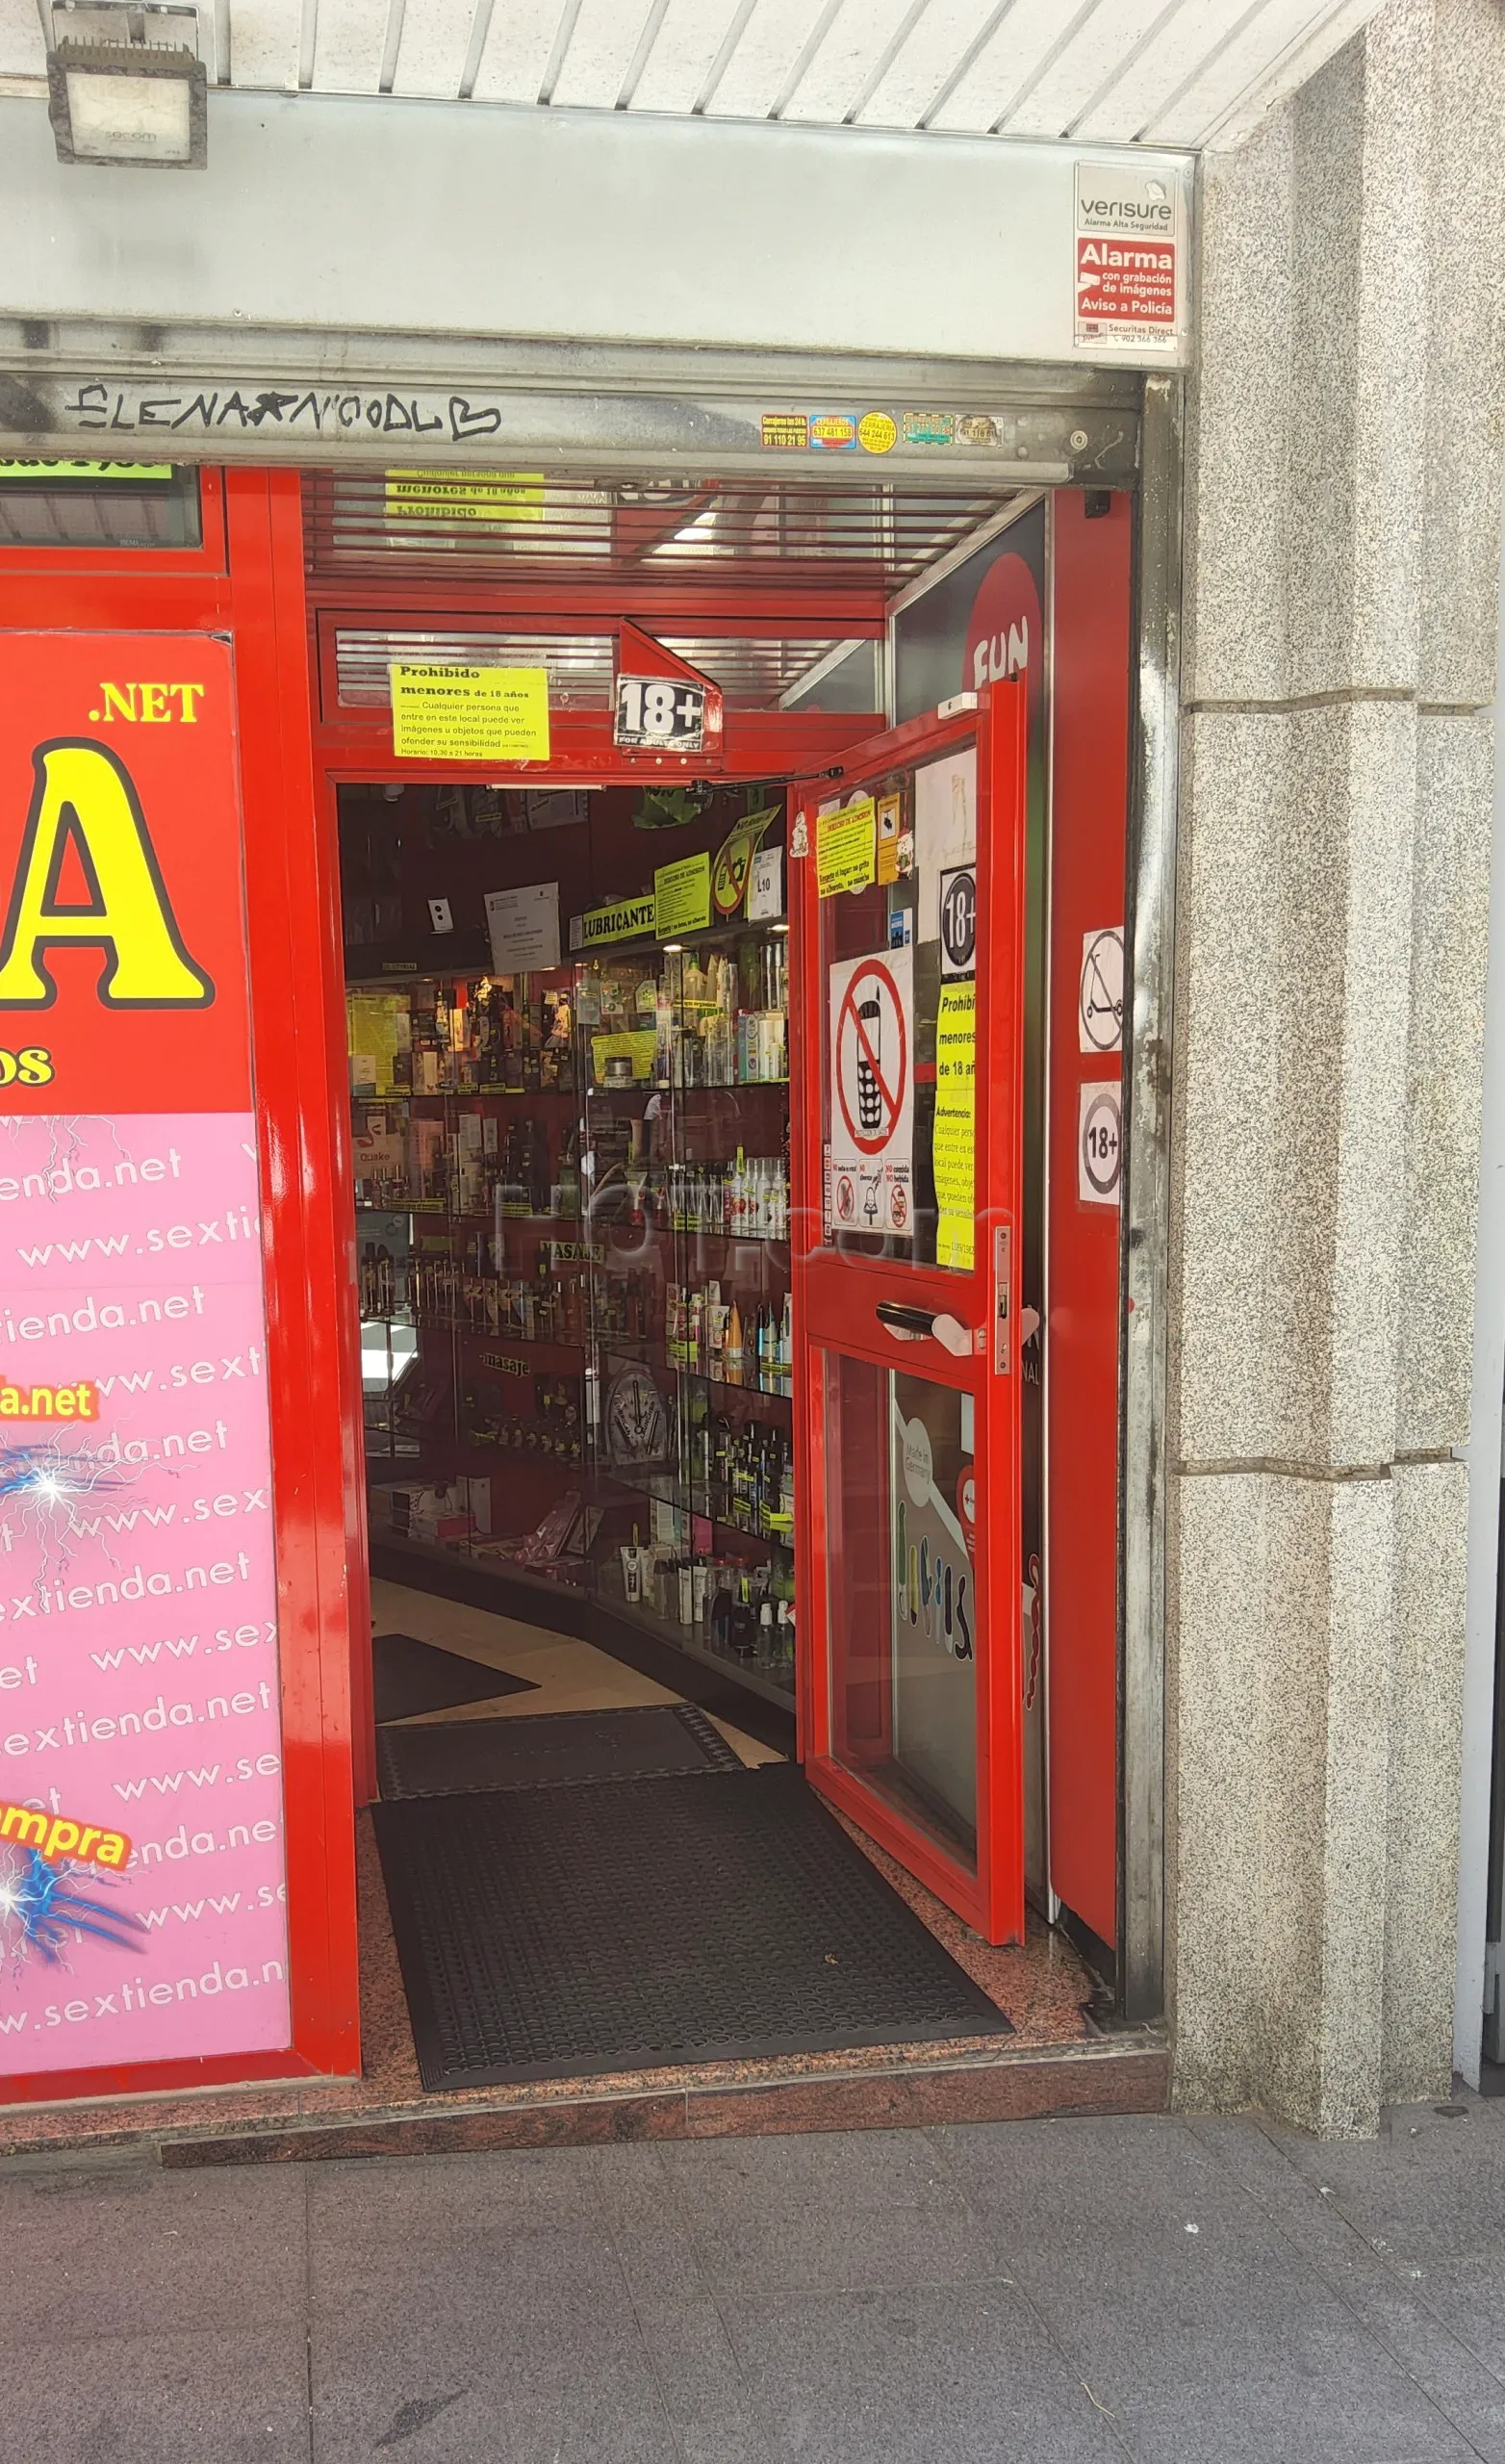 Madrid, Spain Sex Tienda